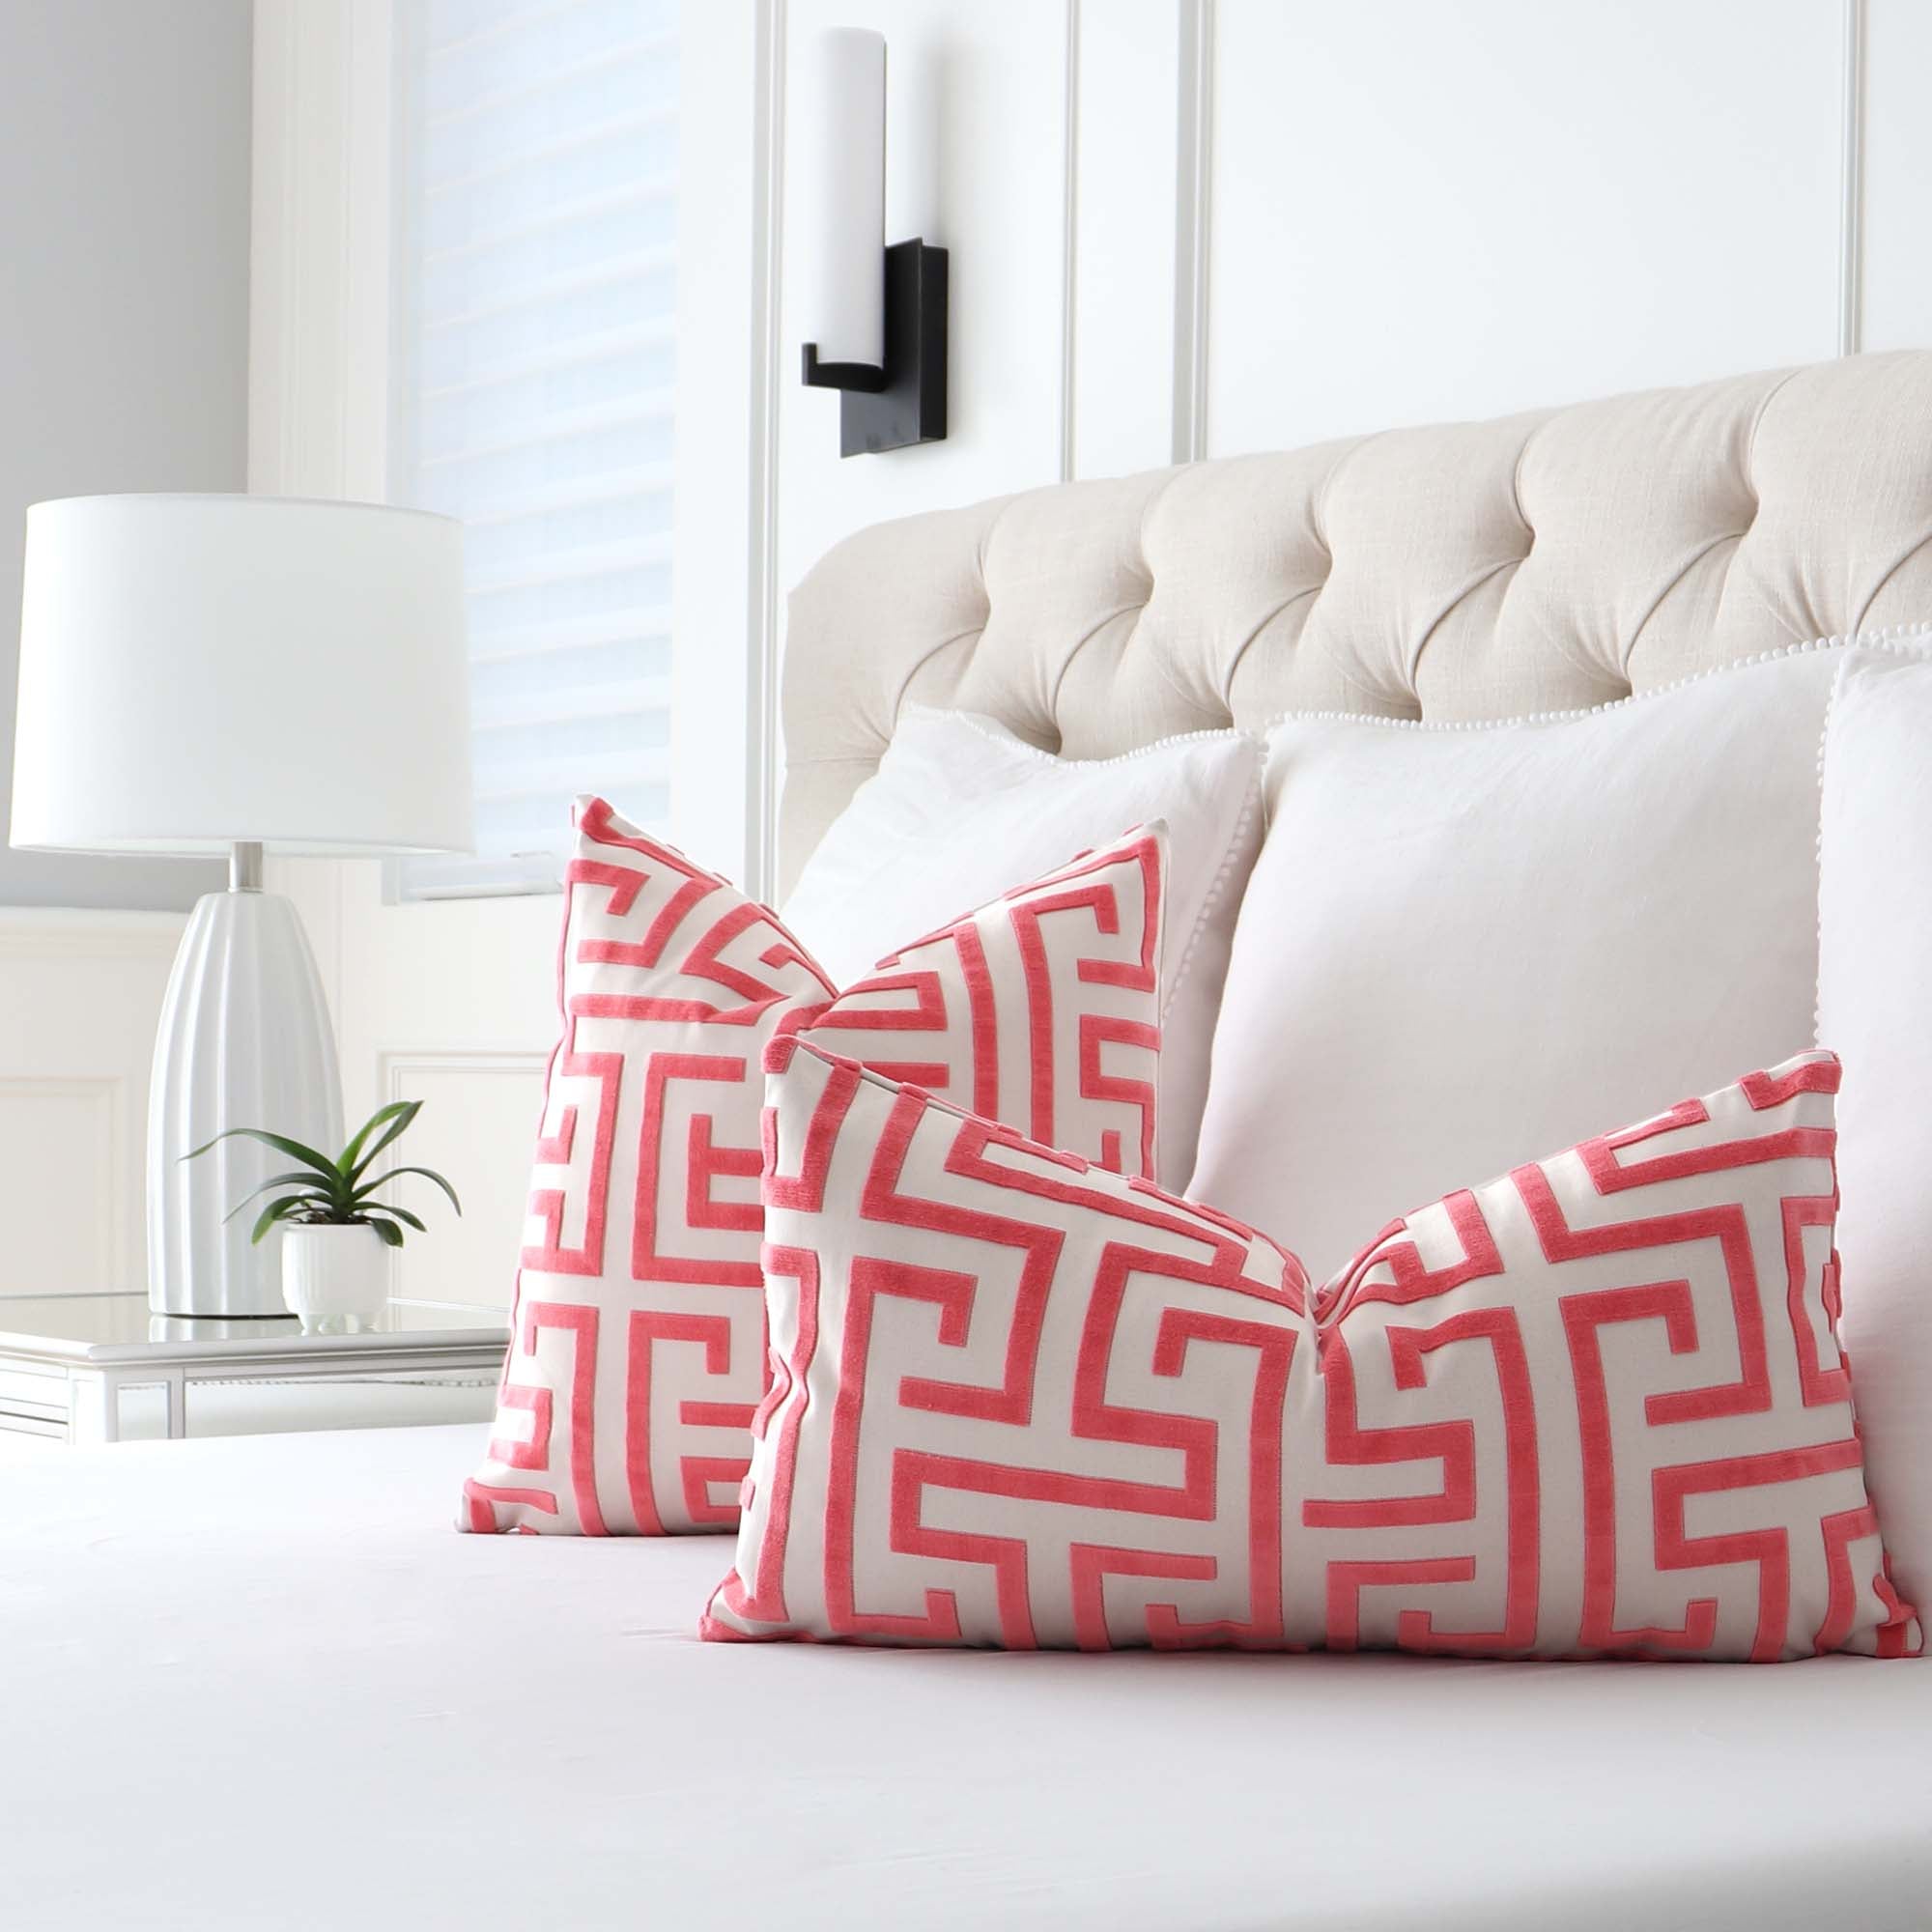 Thibaut Ming Trail Velvet Watermelon Red Designer Luxury Throw Pillow Cover in Bedroom